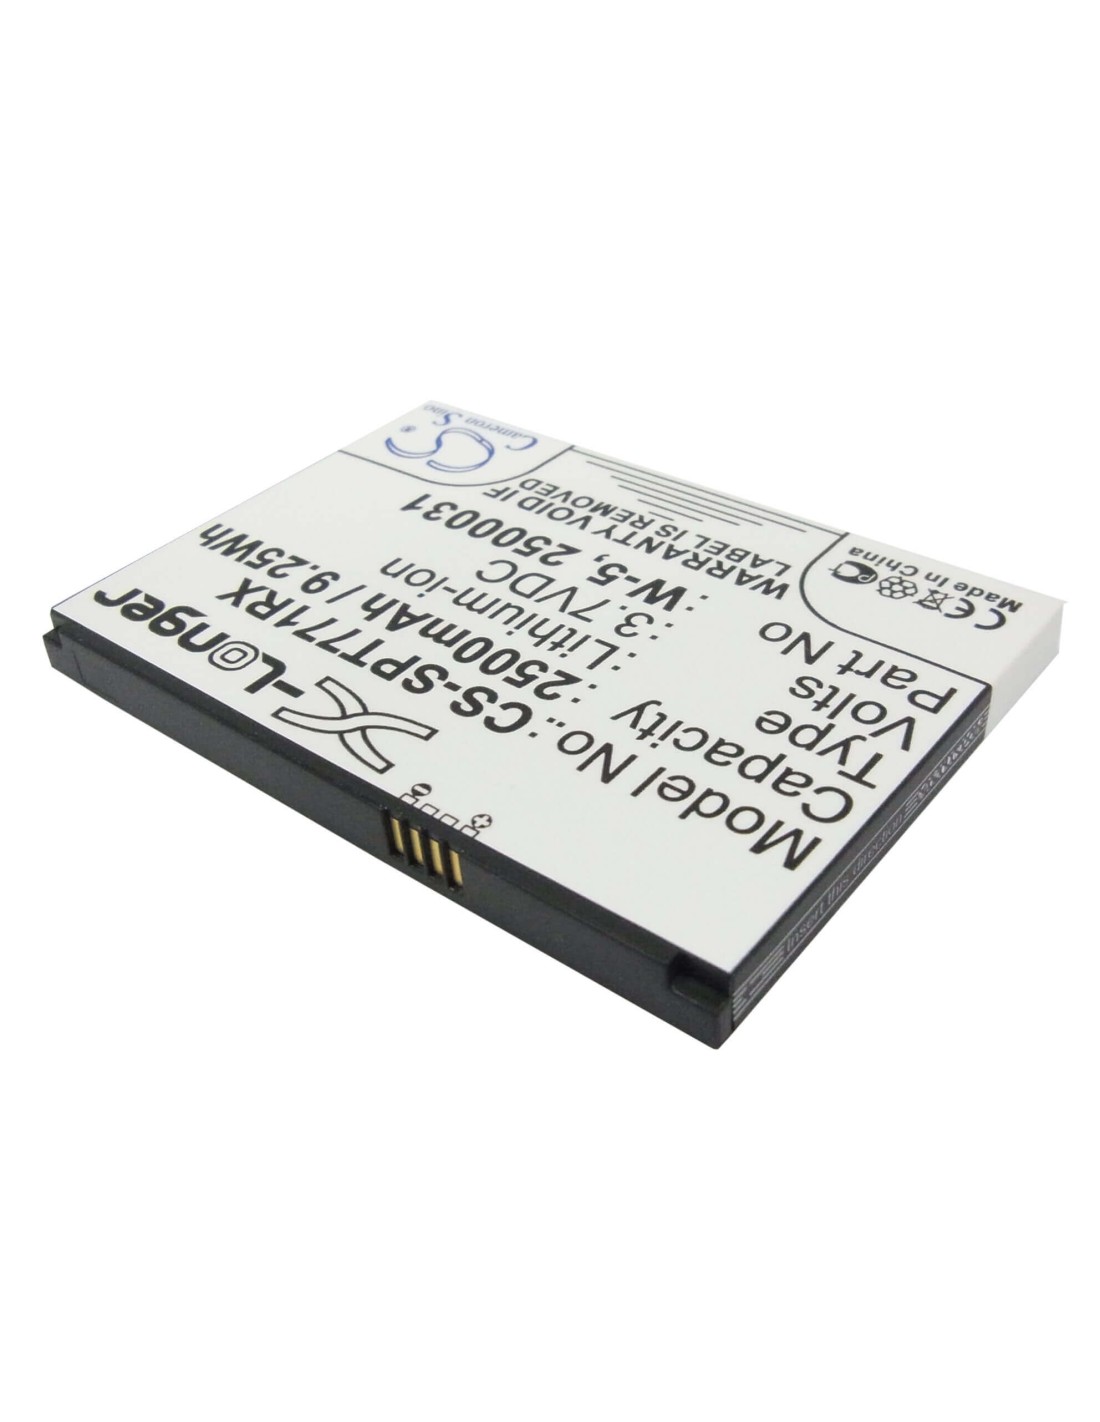 Battery for Sprint Aircard 770s, Aircard 771s, 3.7V, 2500mAh - 9.25Wh